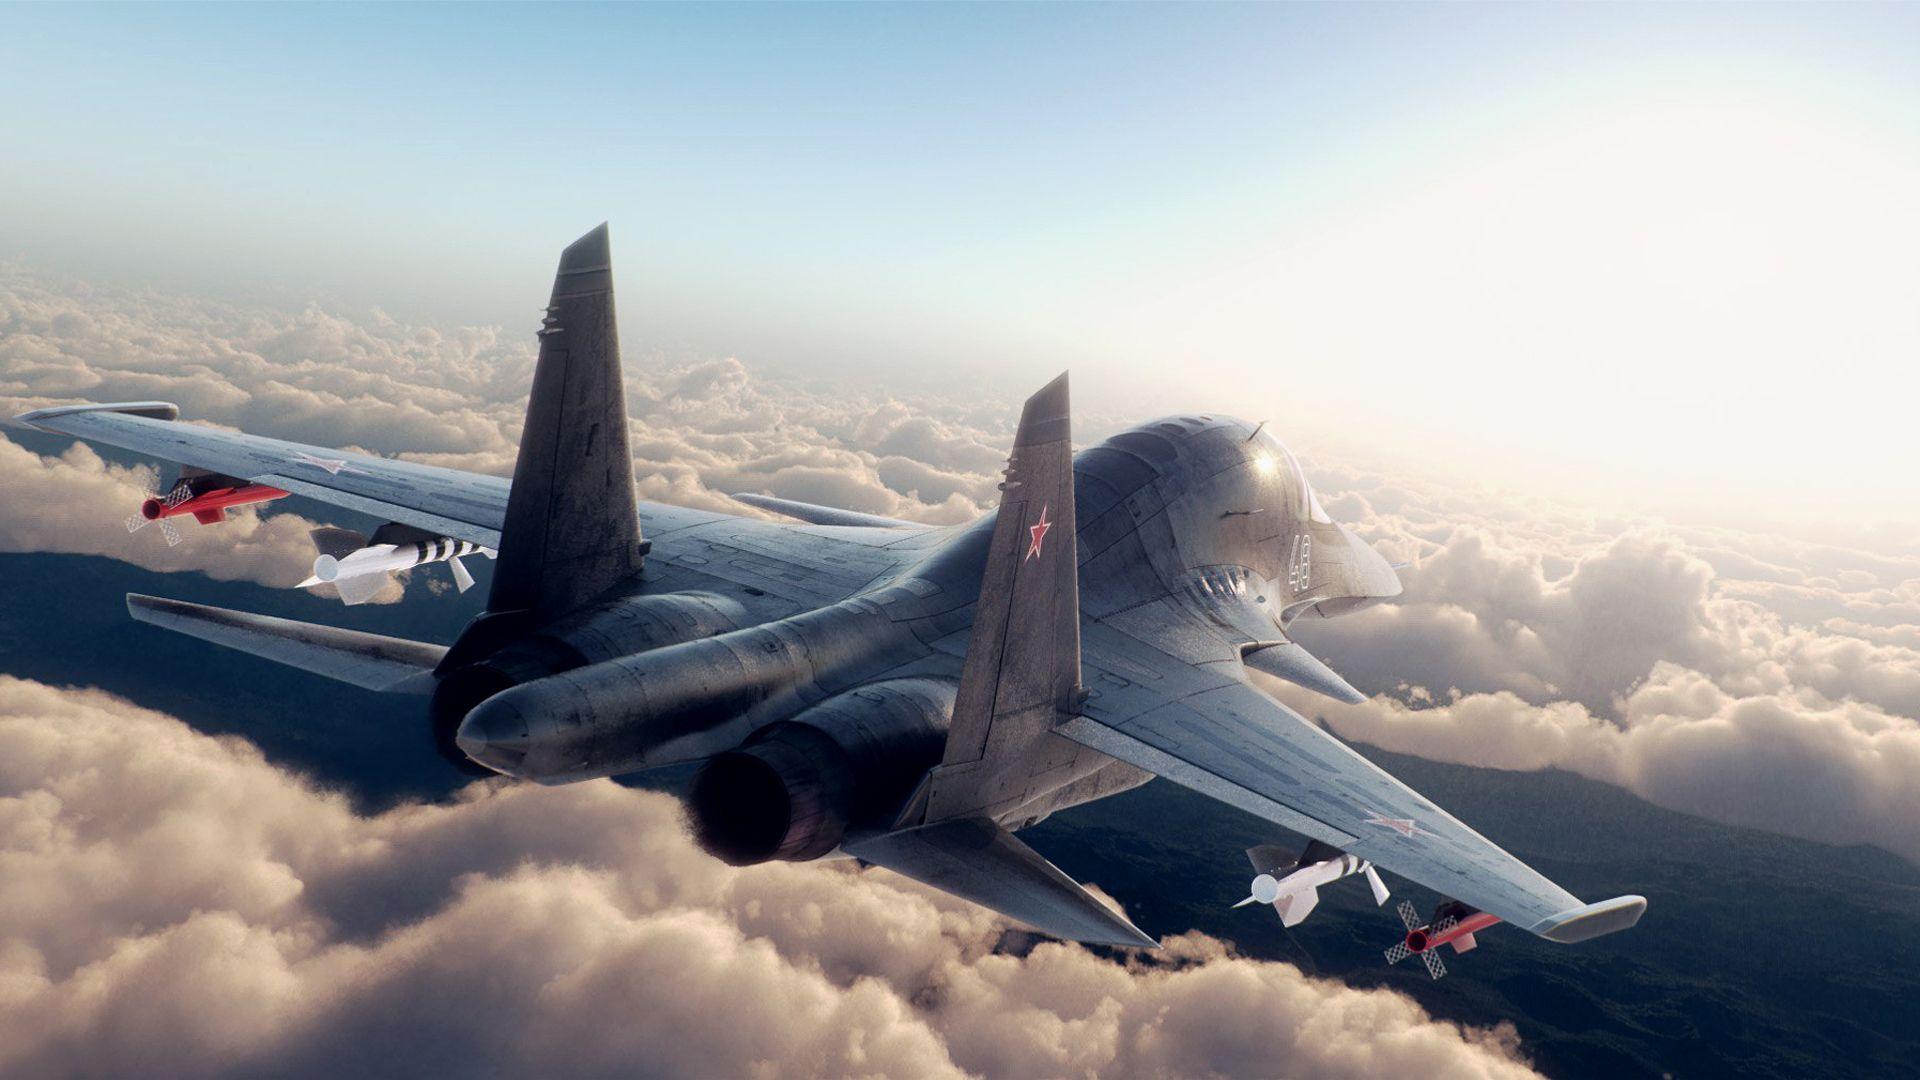 Preview Fighter Jet Wallpaper. feelgrafix.com